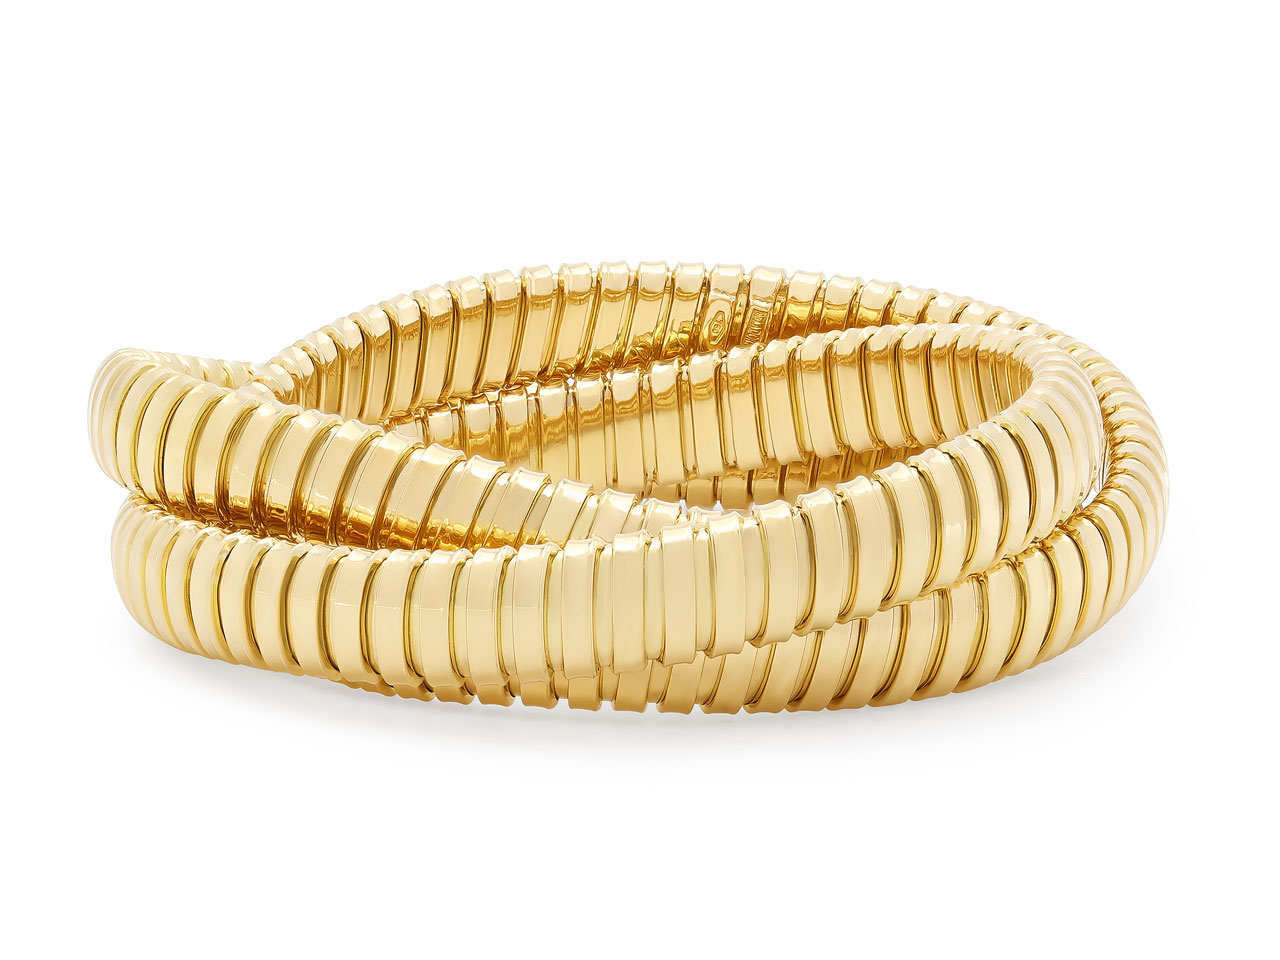 Rolling Bracelet in 18K Yellow Gold, 9mm, Large Wrist Size, by Beladora